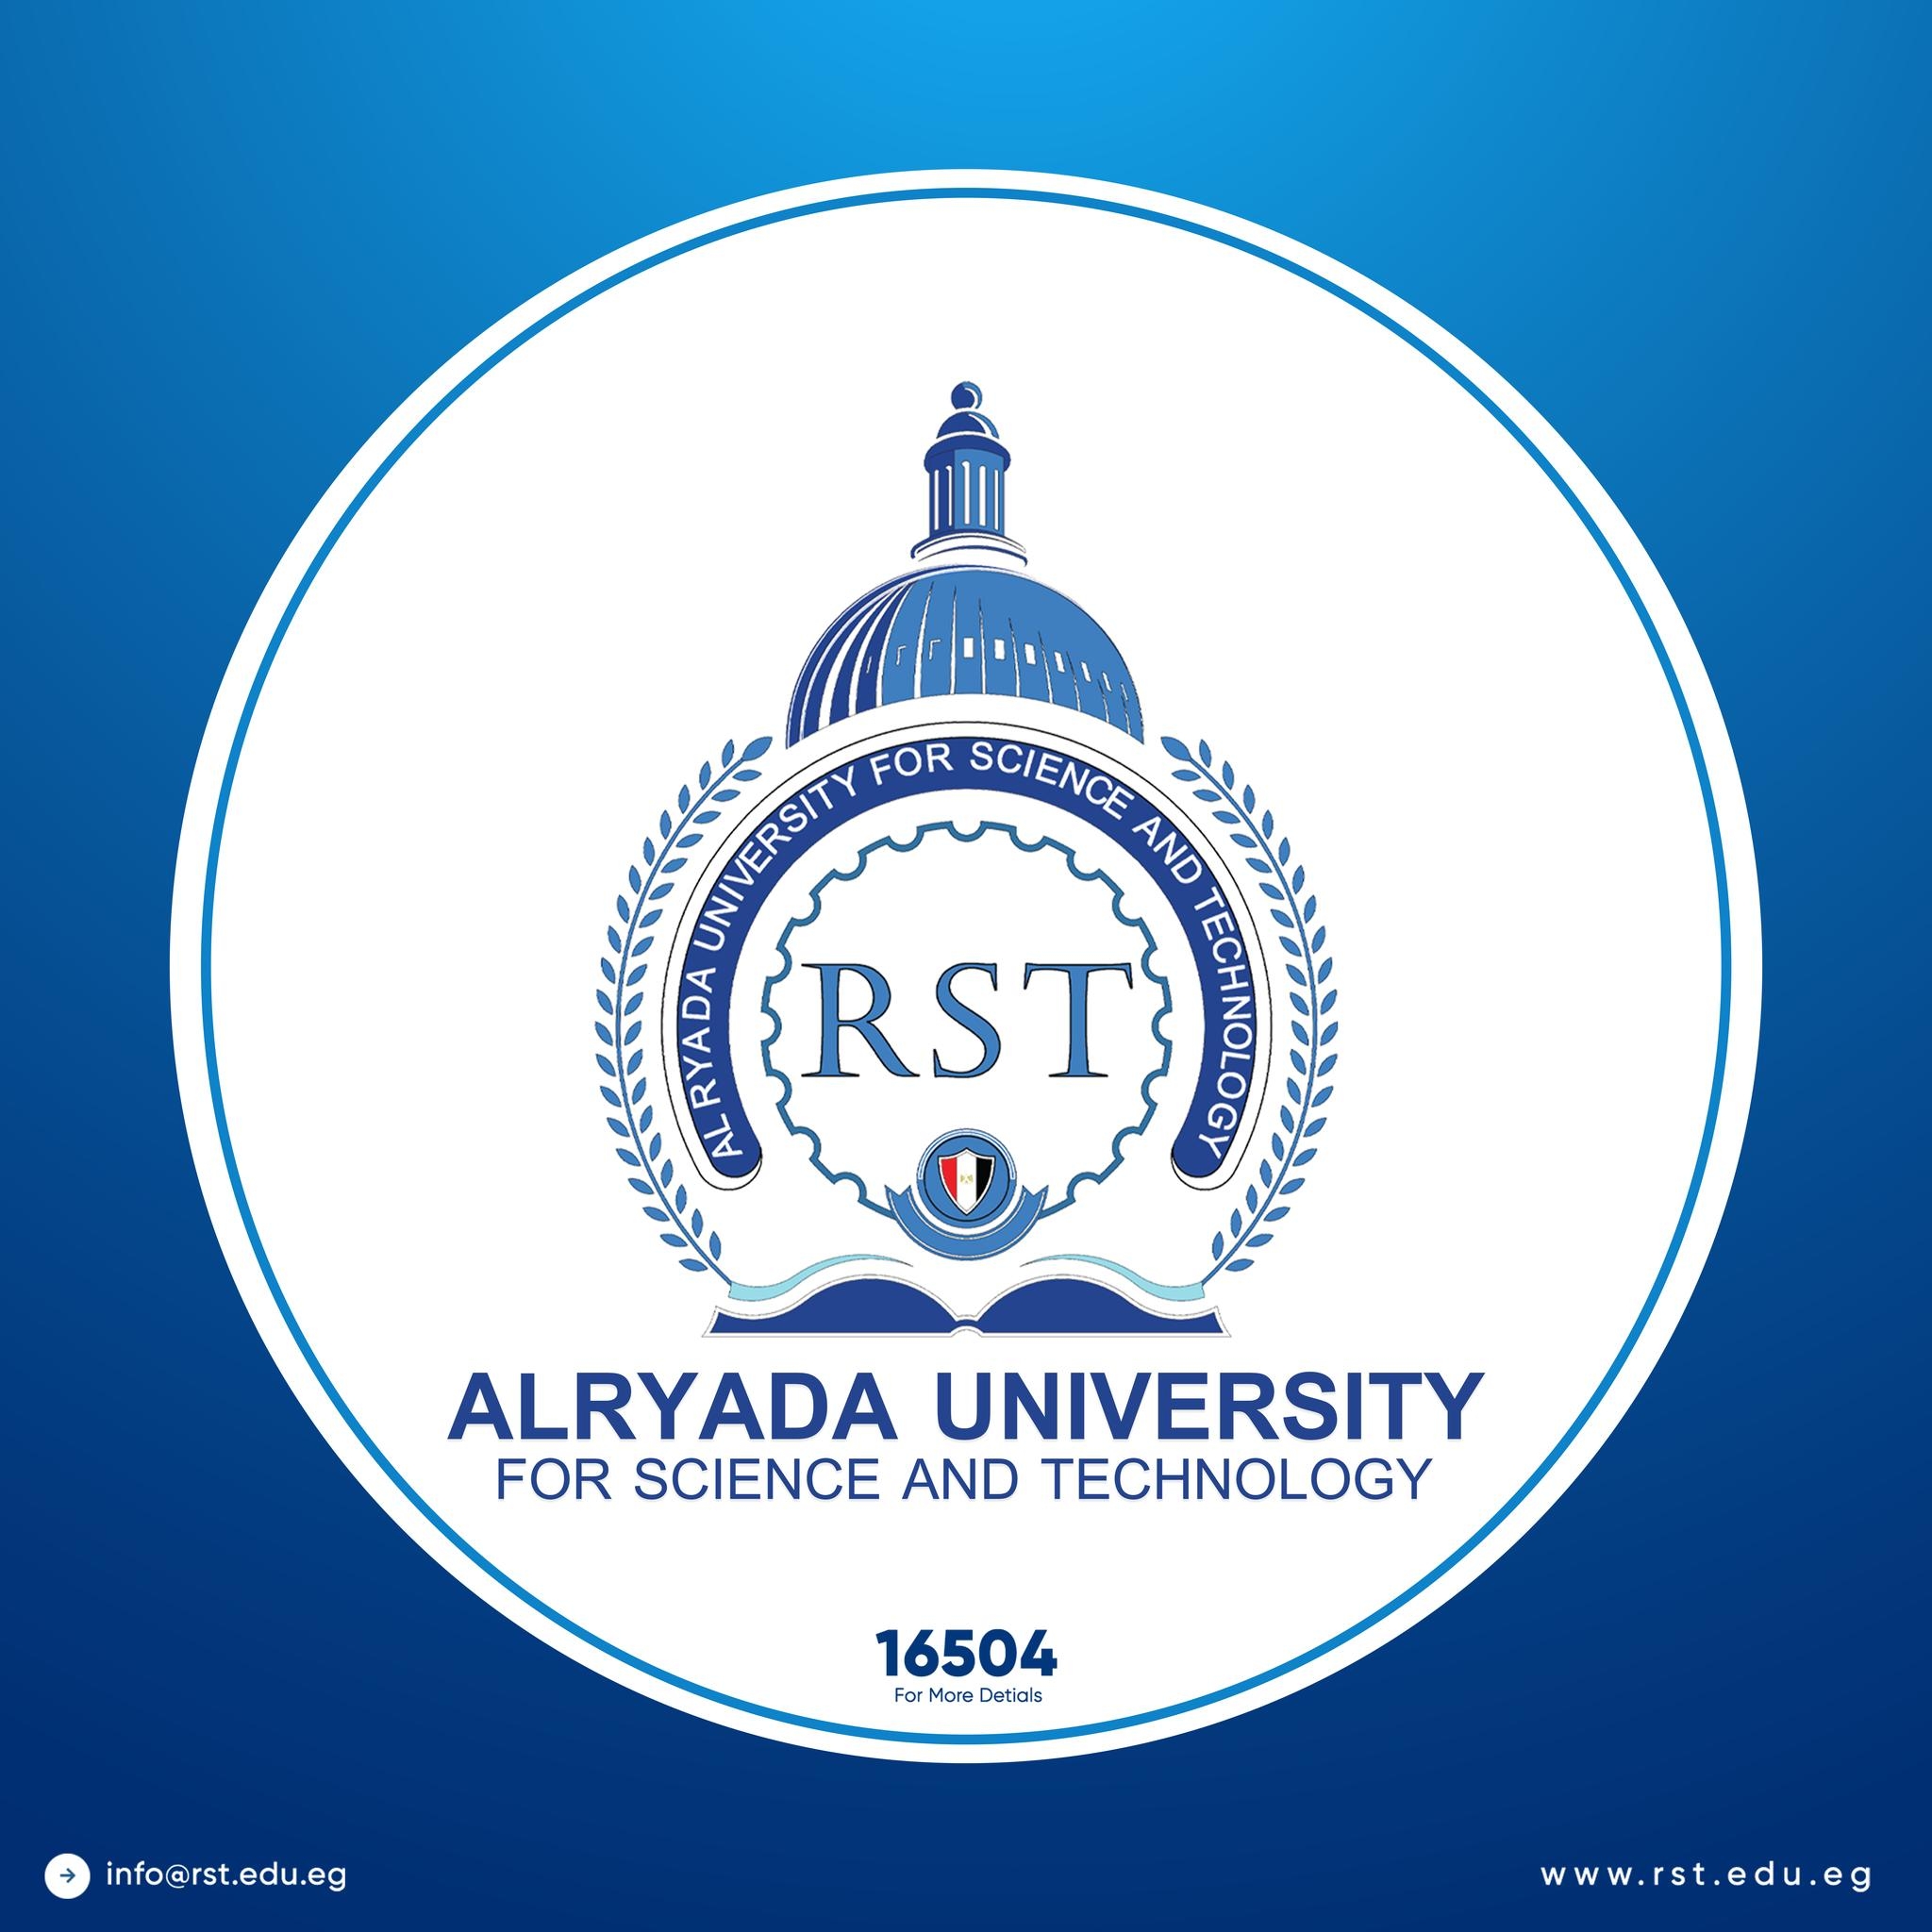 Al Ryada University